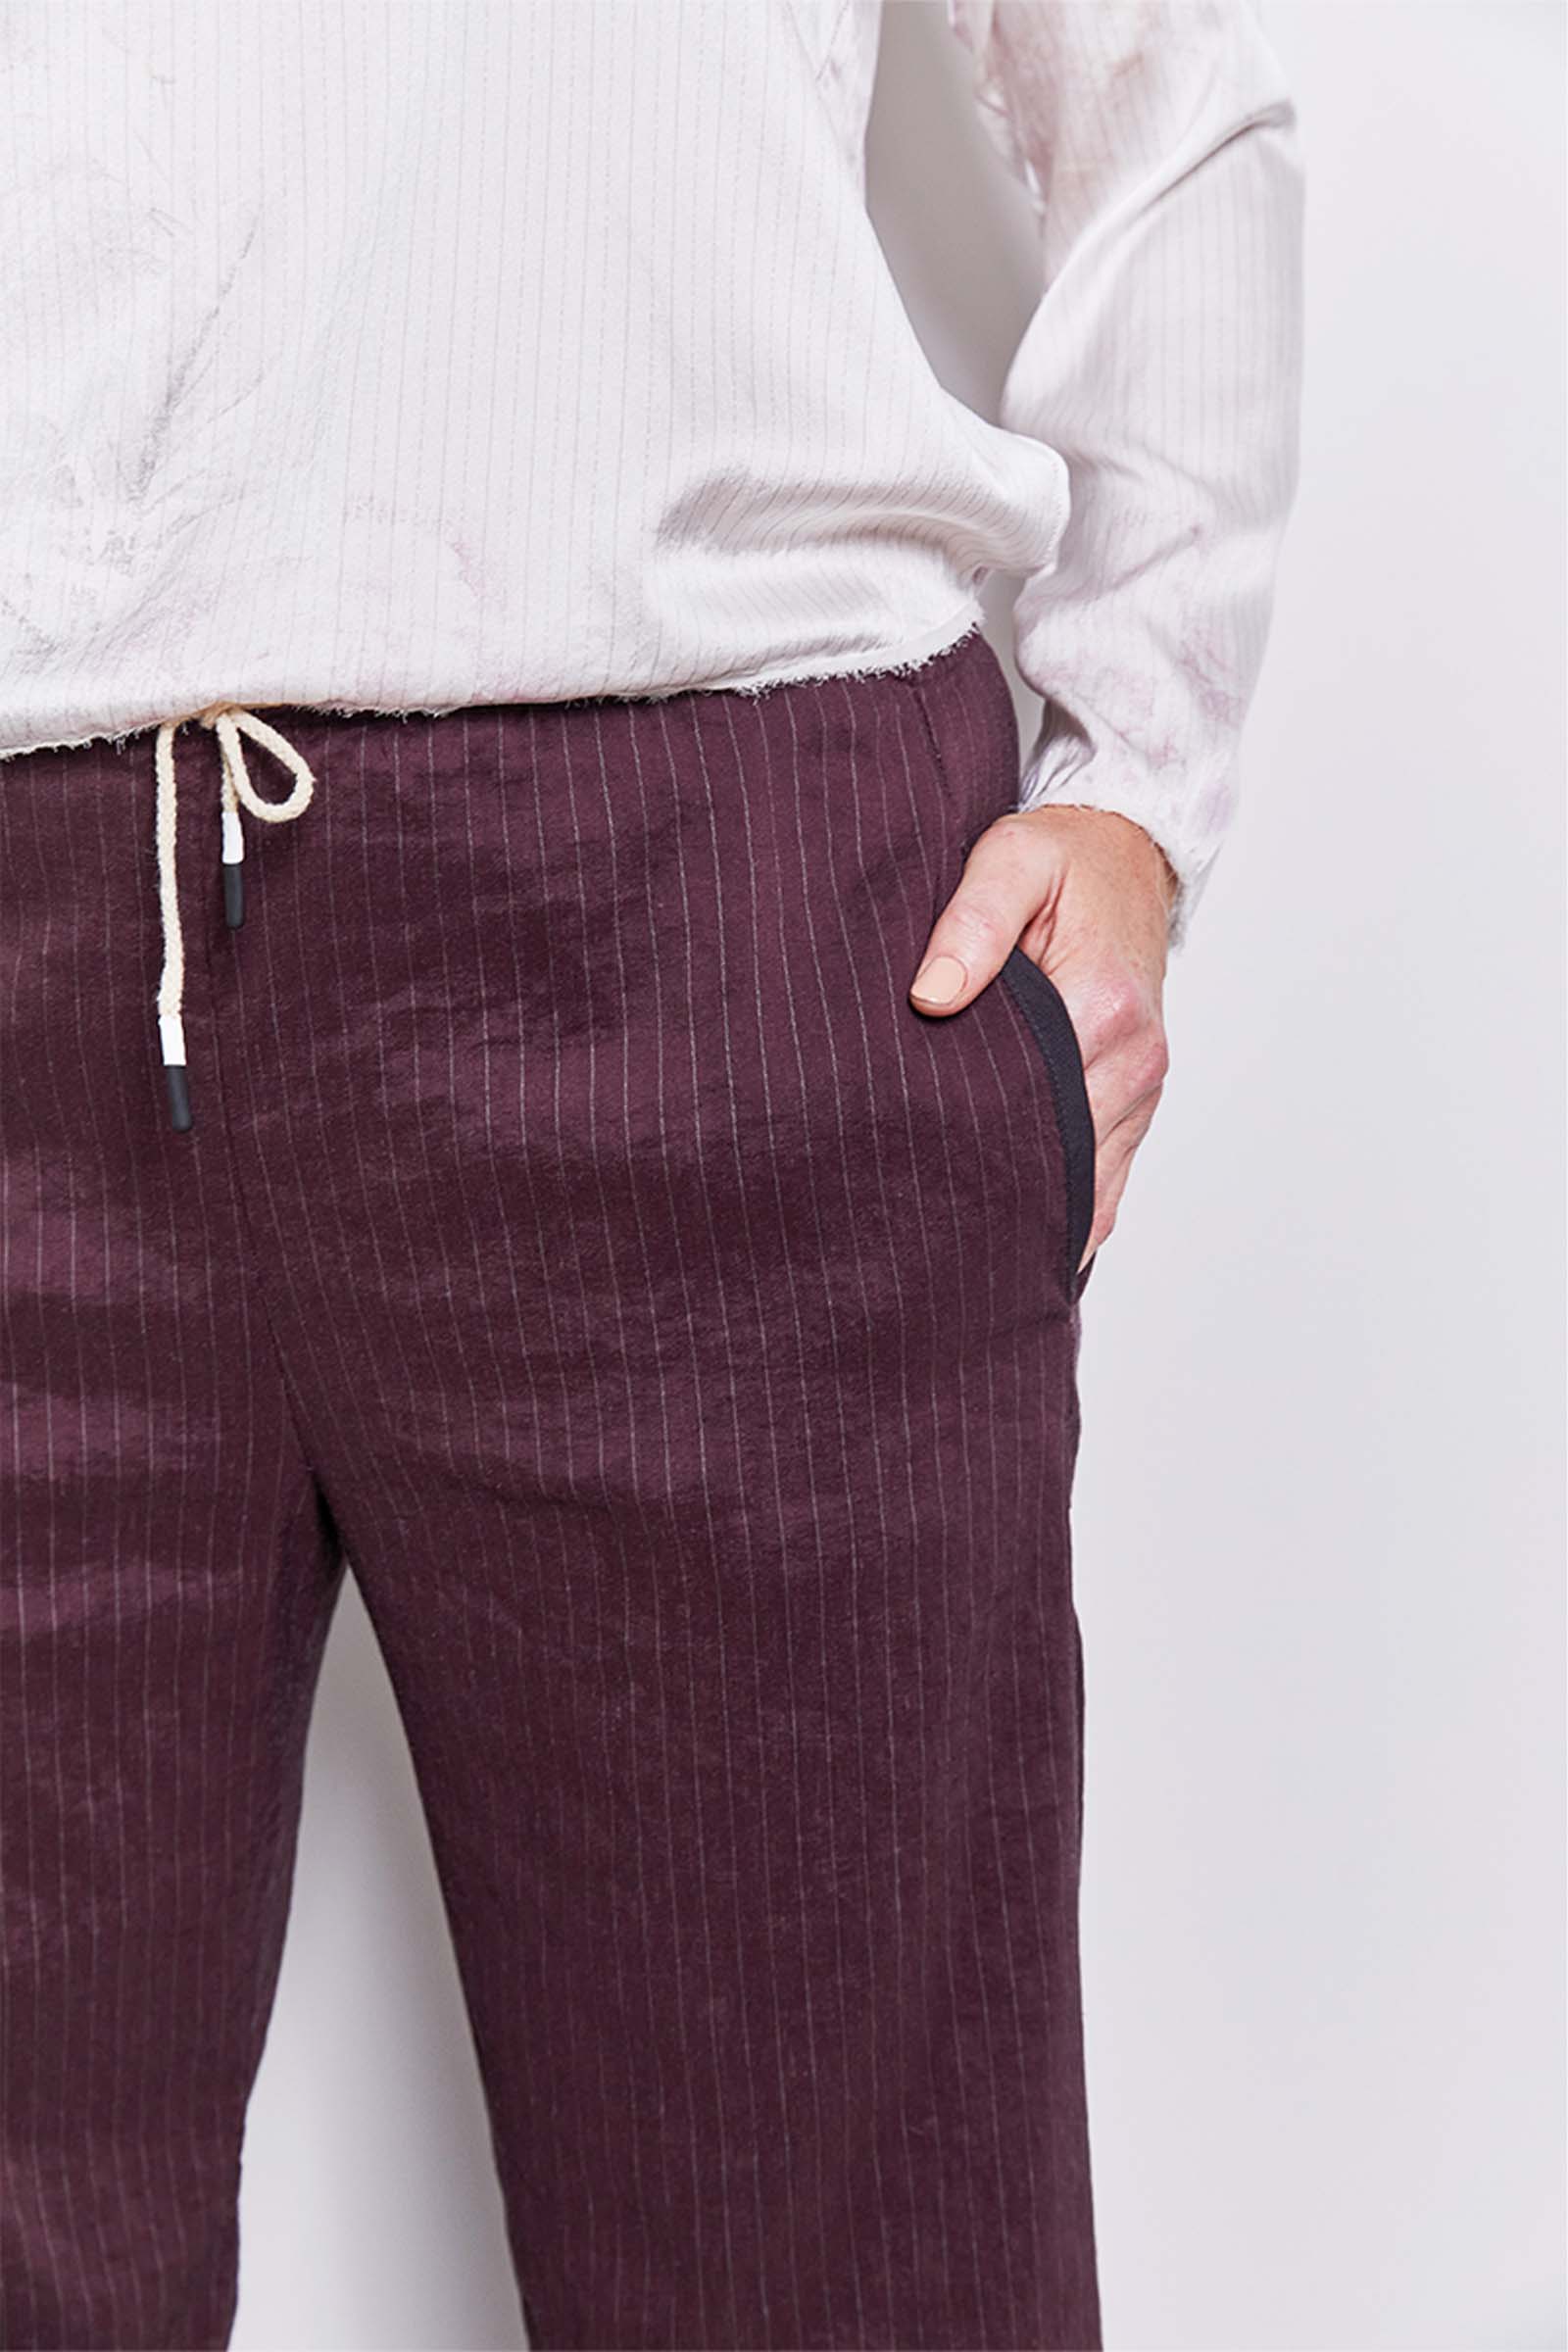 byfreer honest lightweight linen pant.